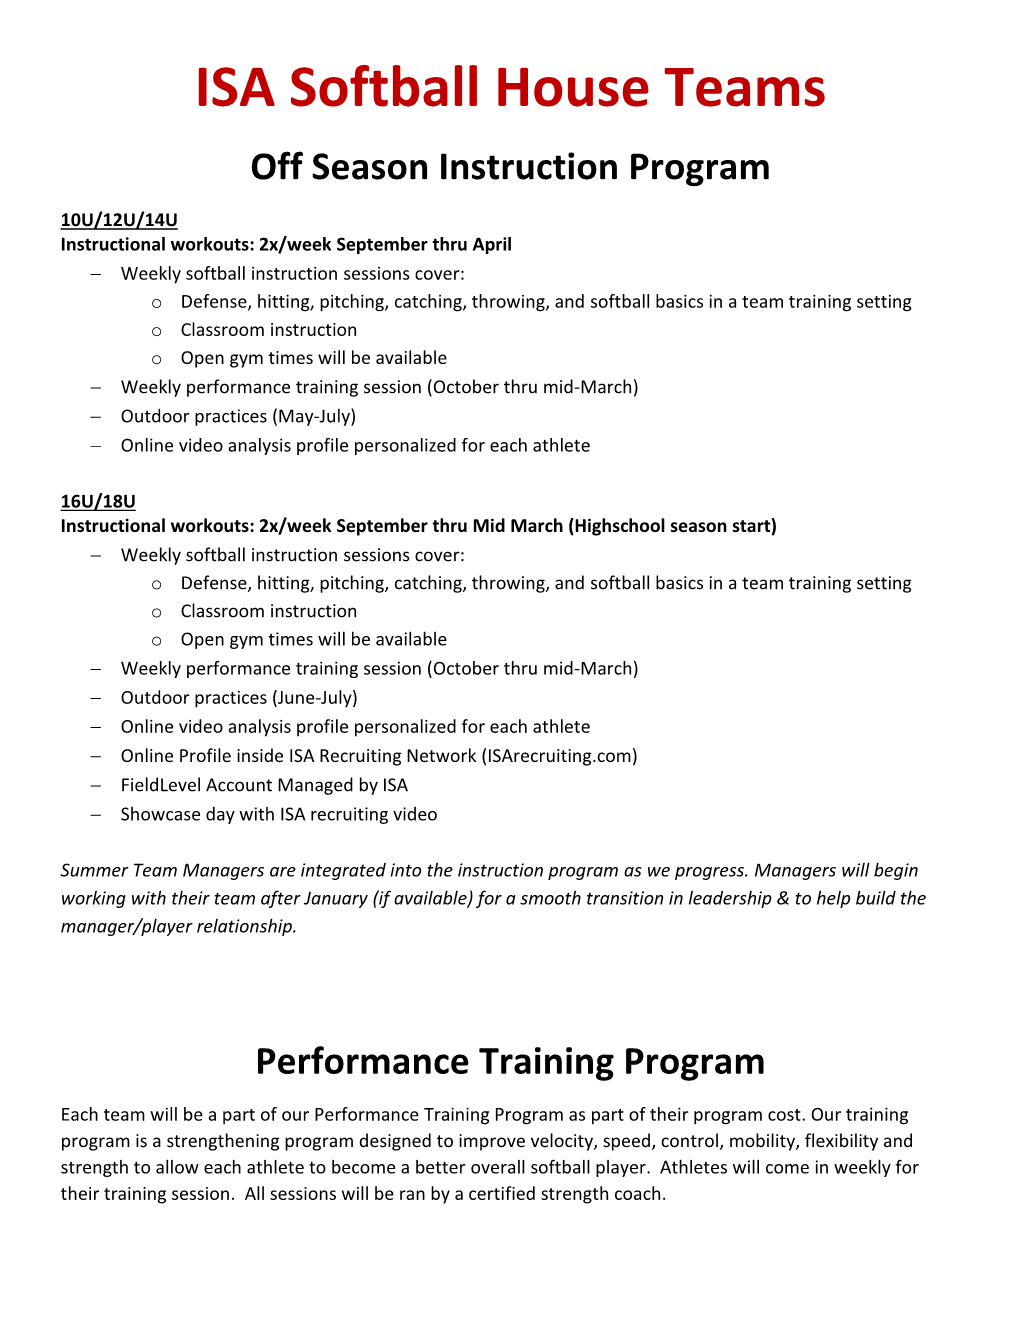 ISA Softball House Teams Off Season Instruction Program